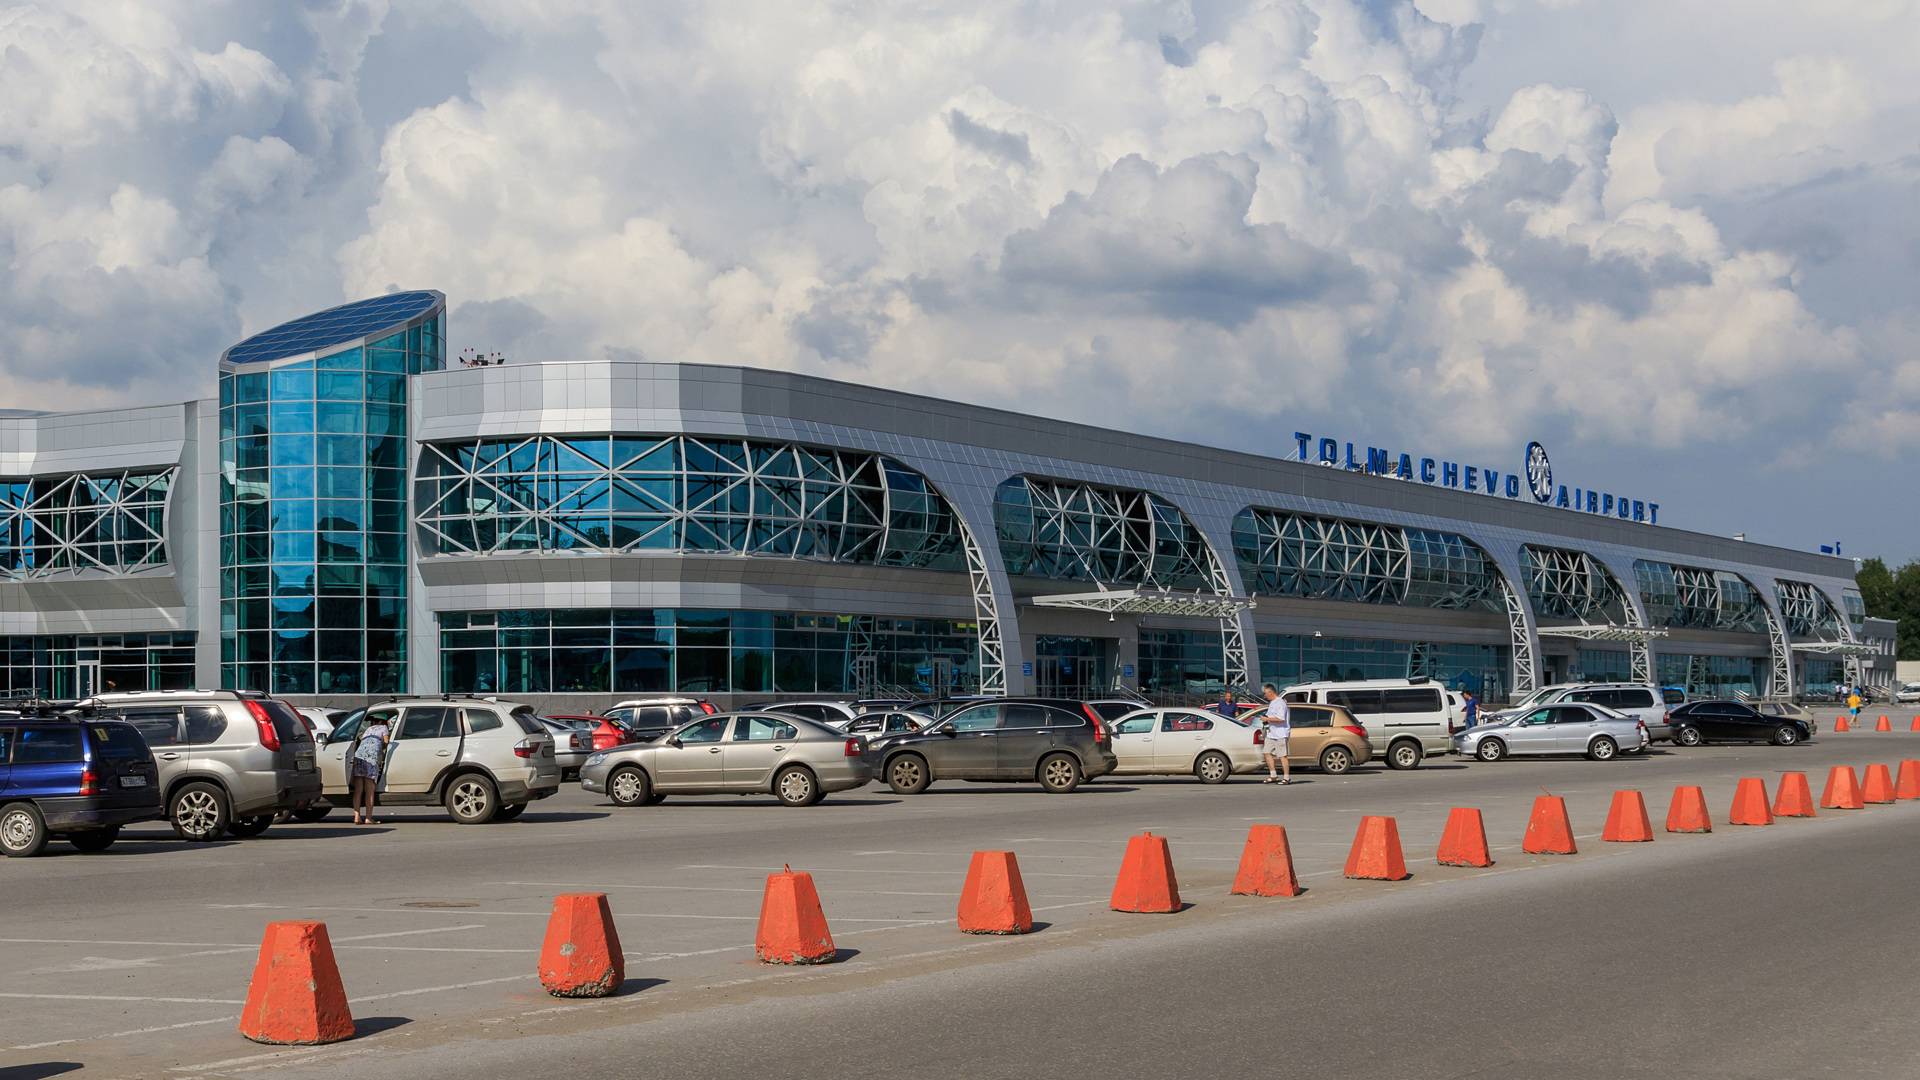 Новосибирск аэропорт центр. Толмачево 2022. Новосибирский аэропорт Толмачево реконструкция. Толмачева аэропорт Новосибирск новый. Новосибирский аэропорт Толмачево внутри.